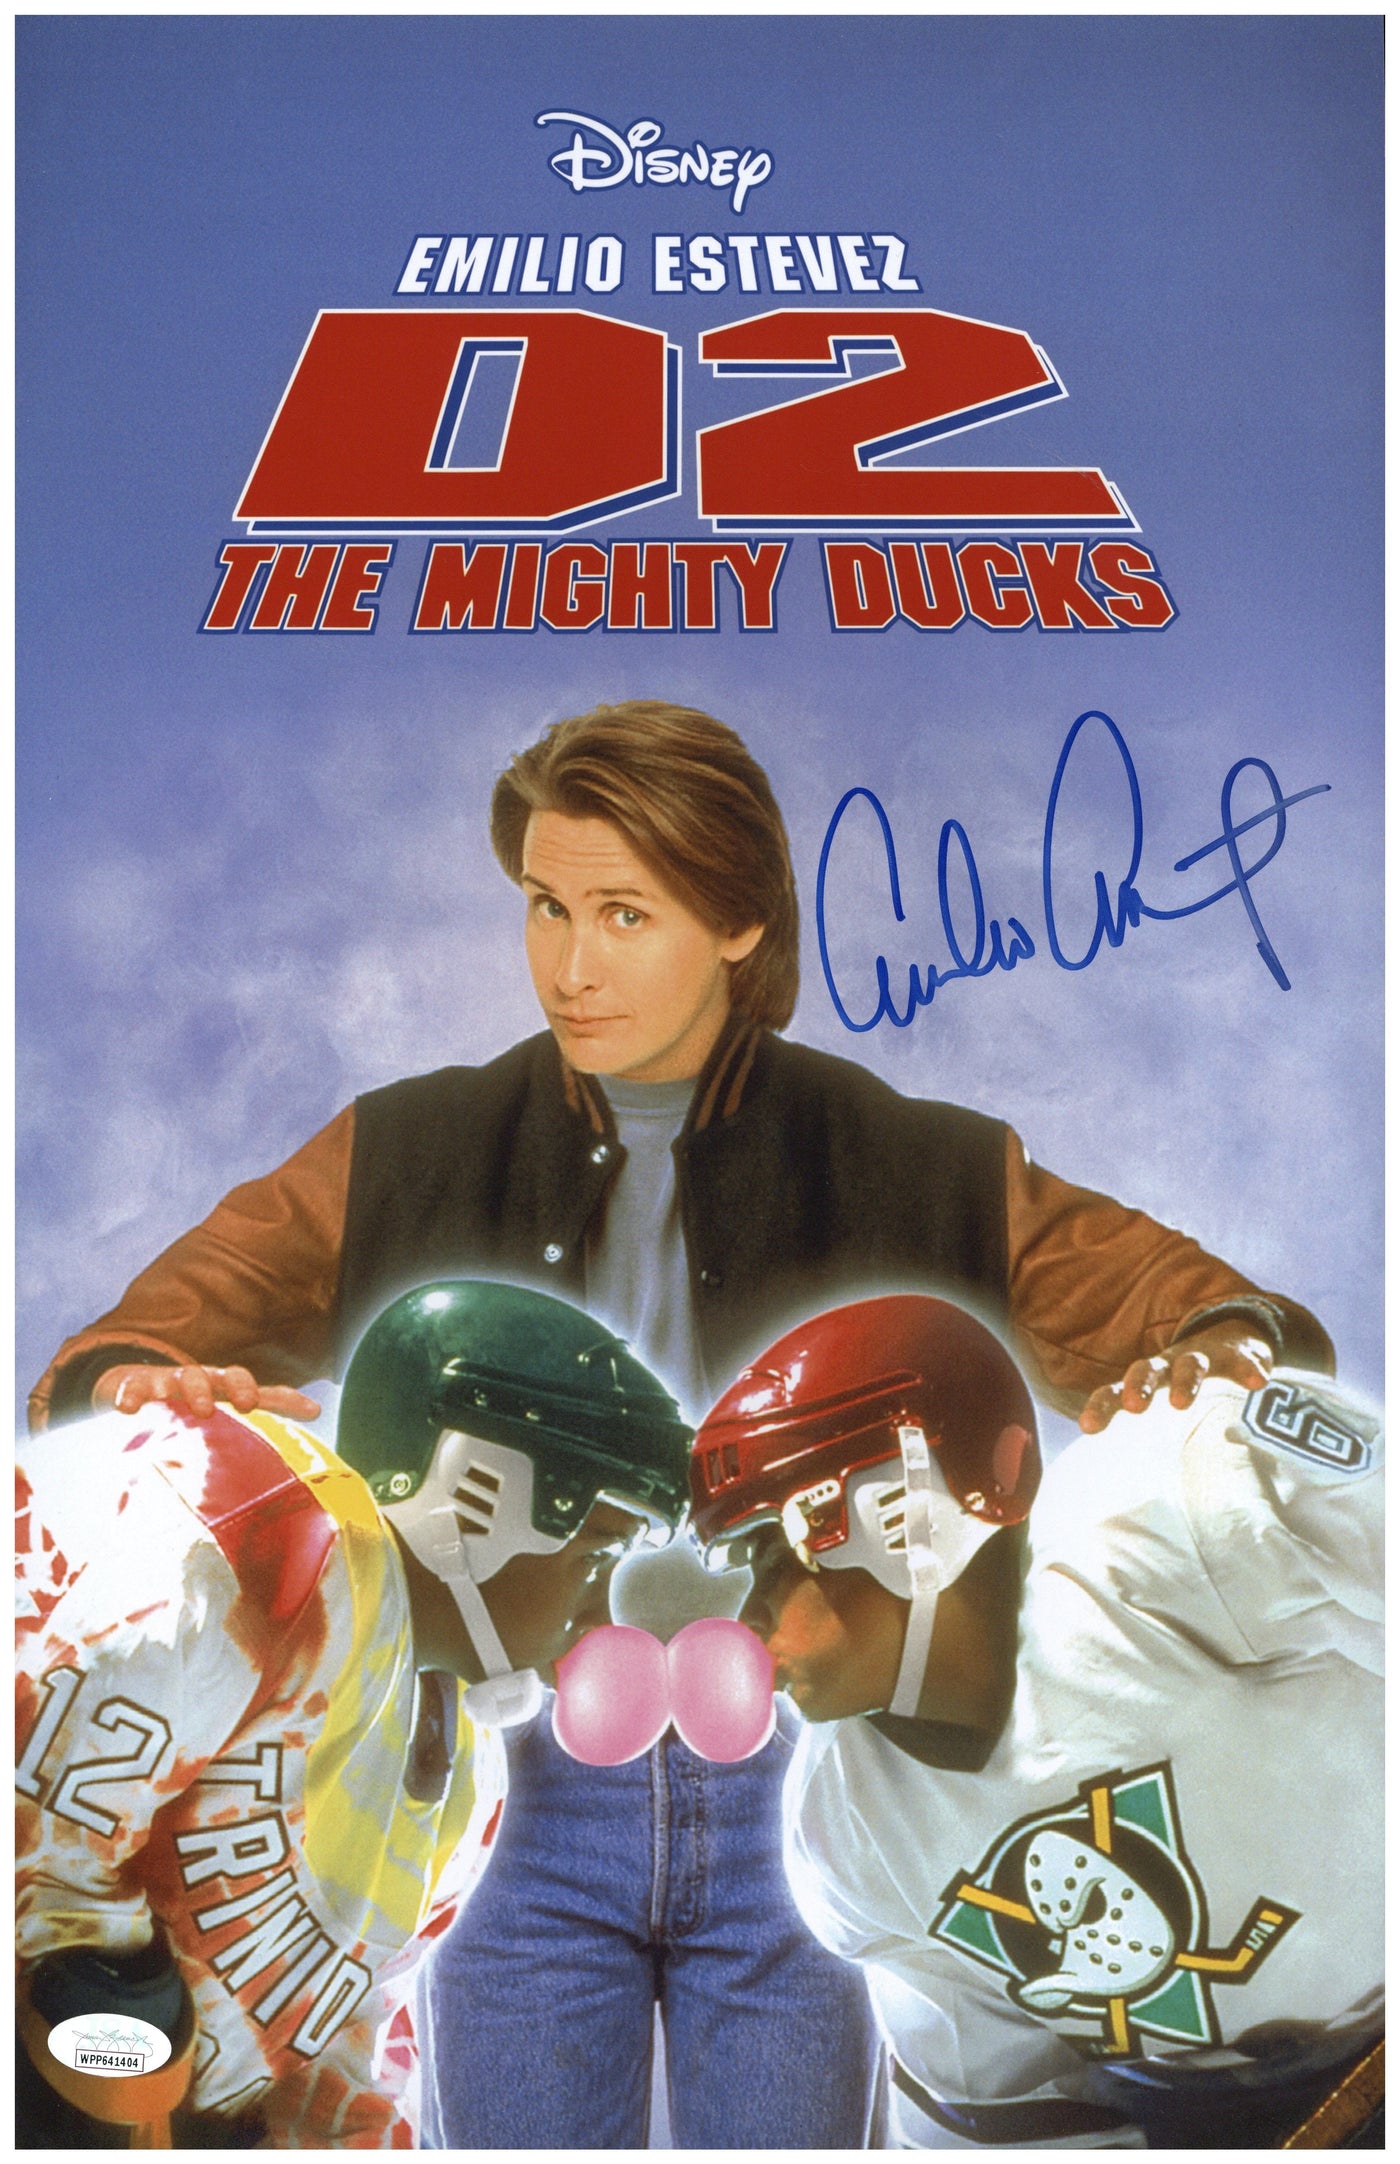 Emilio Estevez Signed 11x17 Photo The Mighty Ducks Mini Poster Autographed JSA COA